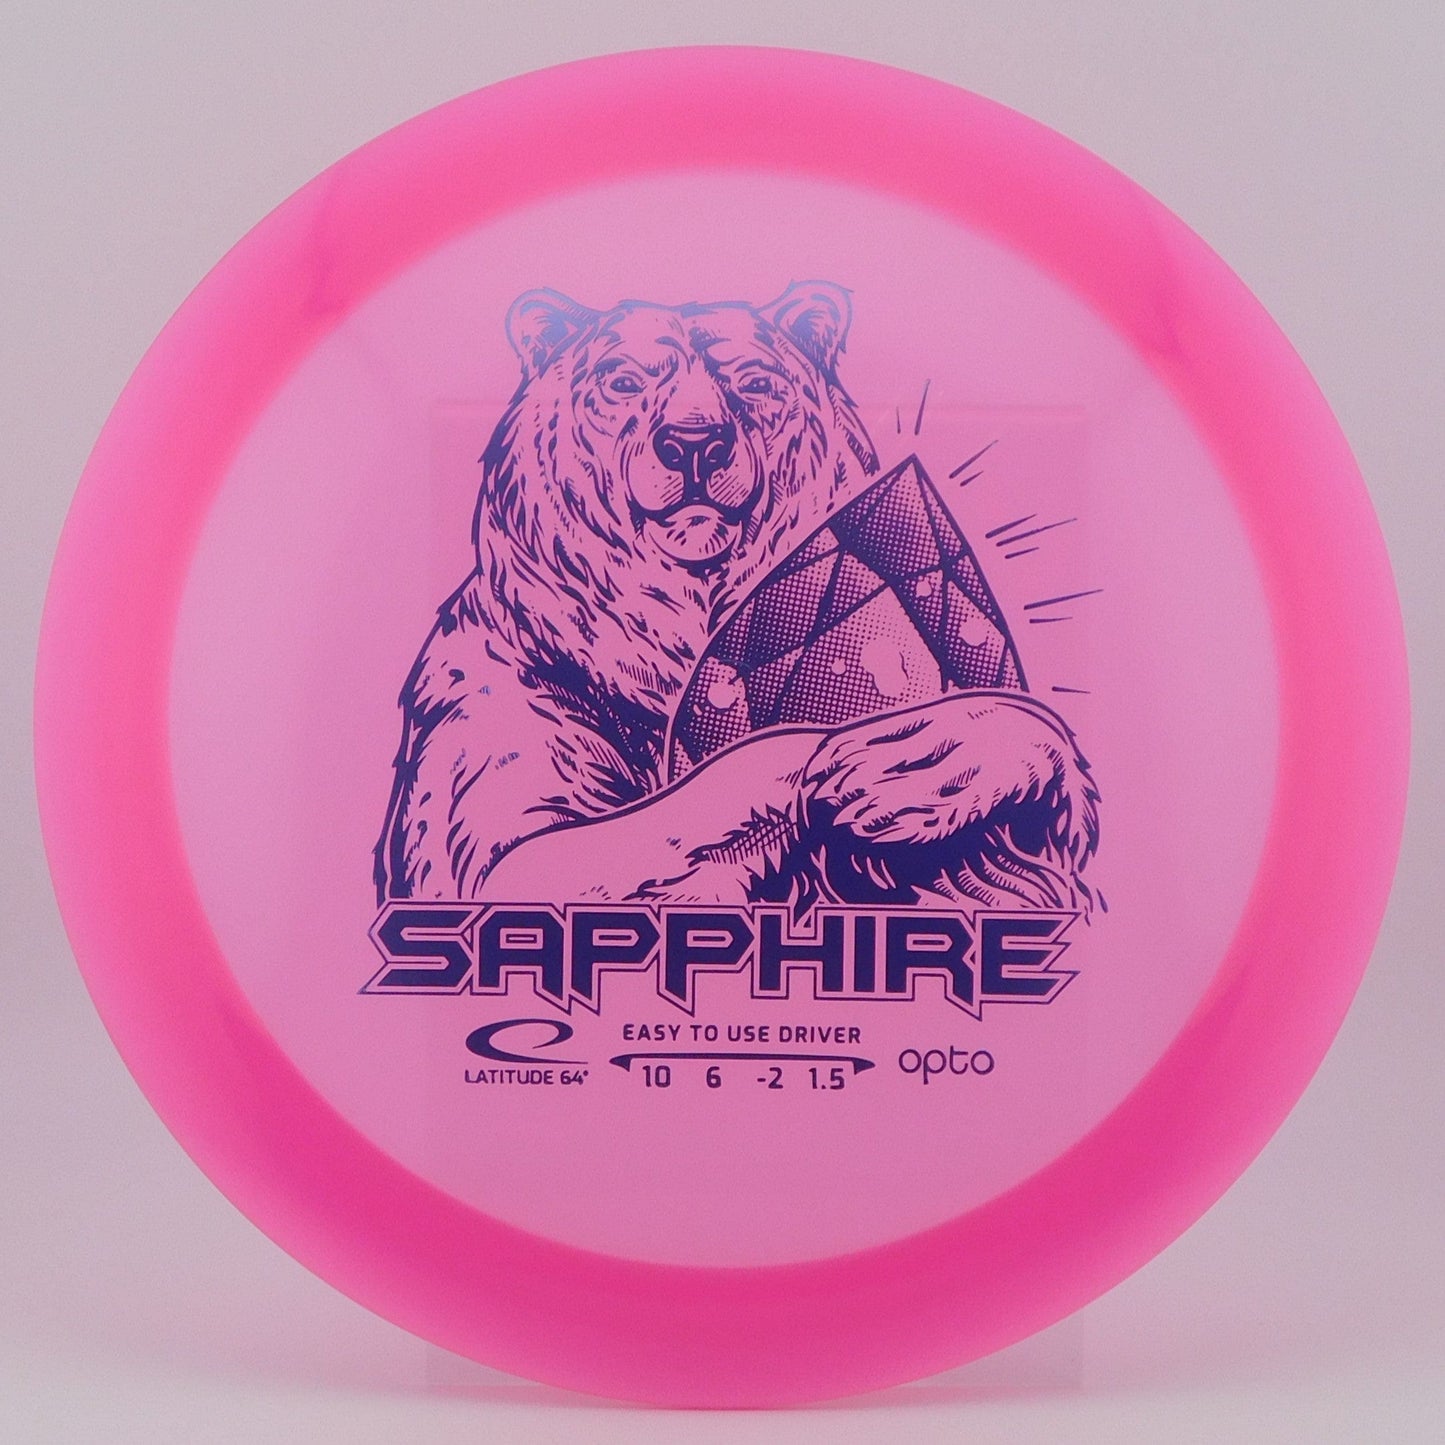 Latitude 64 Sapphire - Opto 10│6│-2│1.5 163.6g - Pink - Latitude 64° Sapphire - Opto Line - 100054